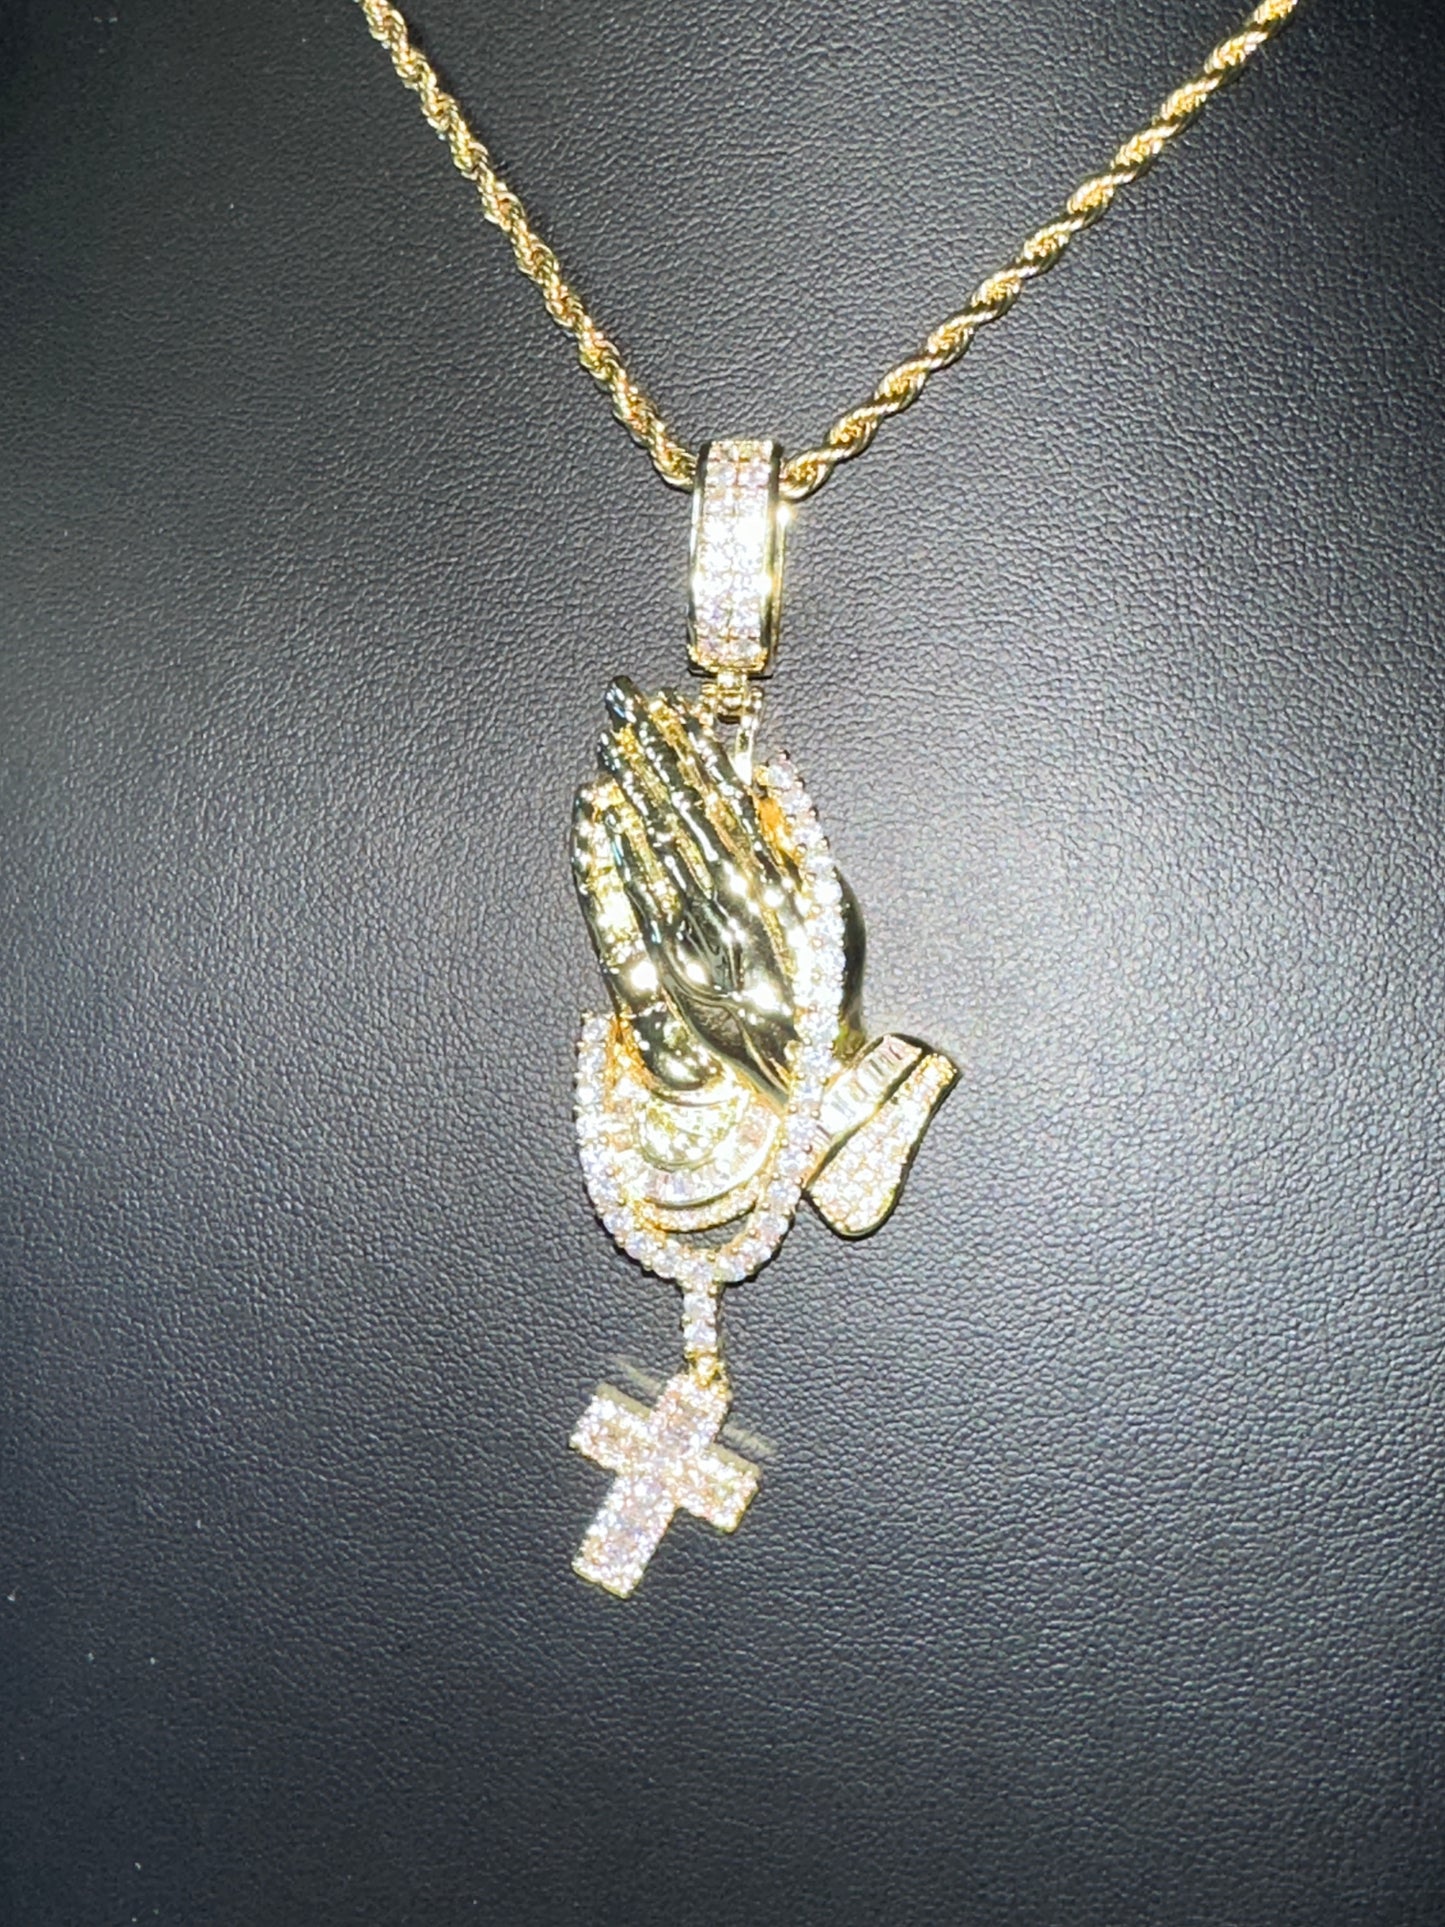 Icy prayer necklace